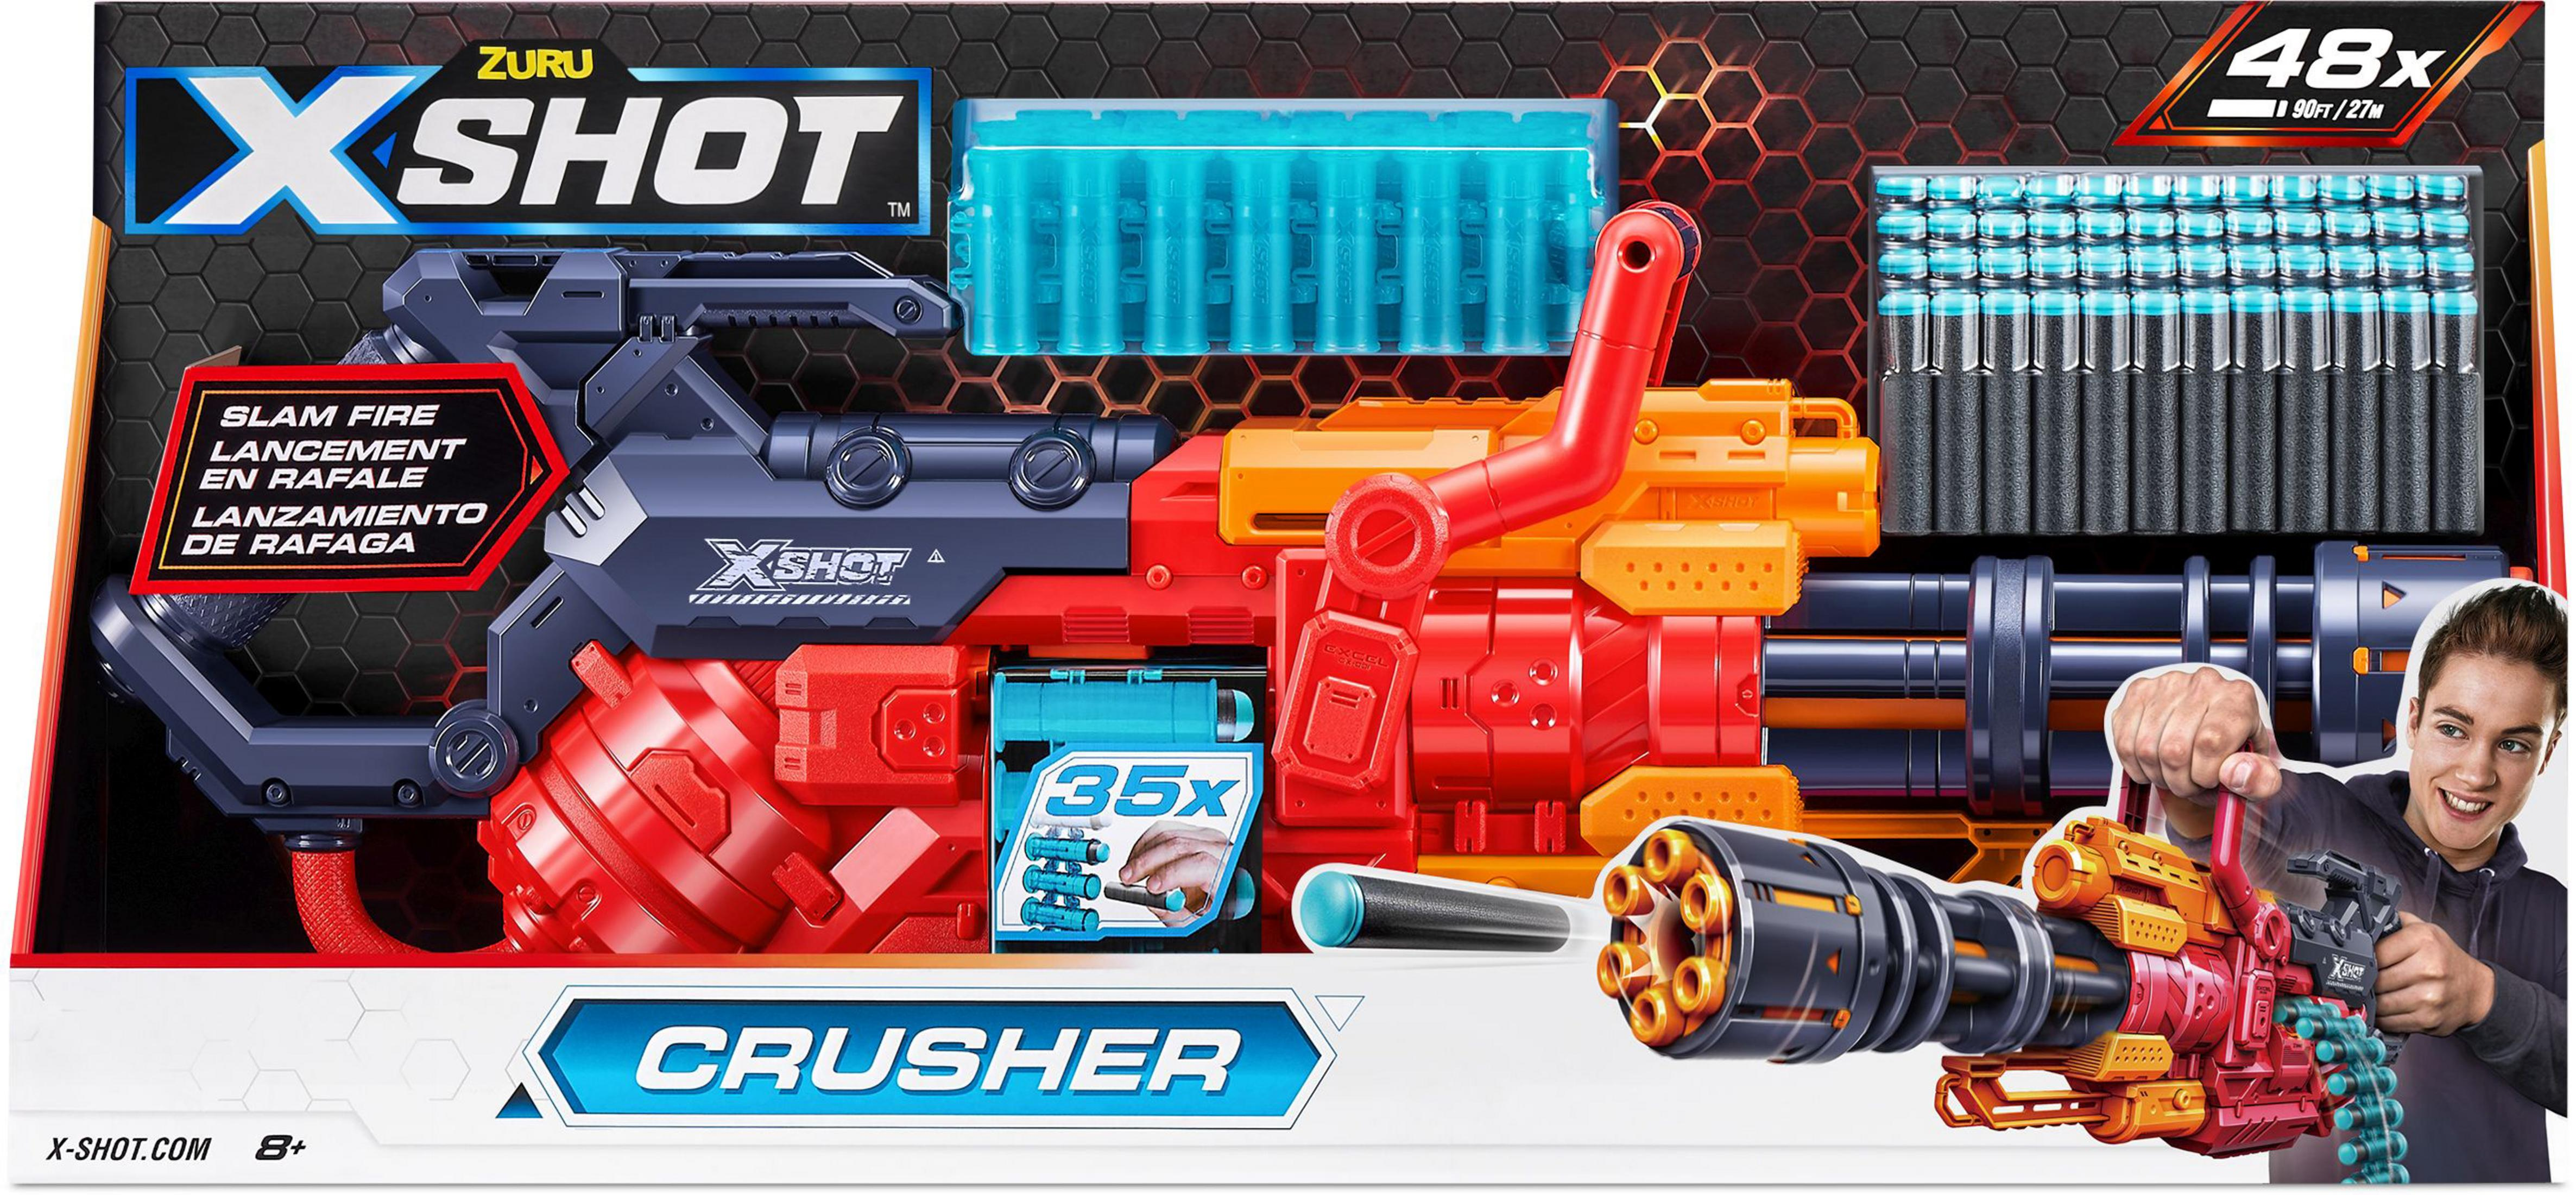 ZURU 36382 X-SHOT EXCEL Blaster CRUSHER Mehrfarbig